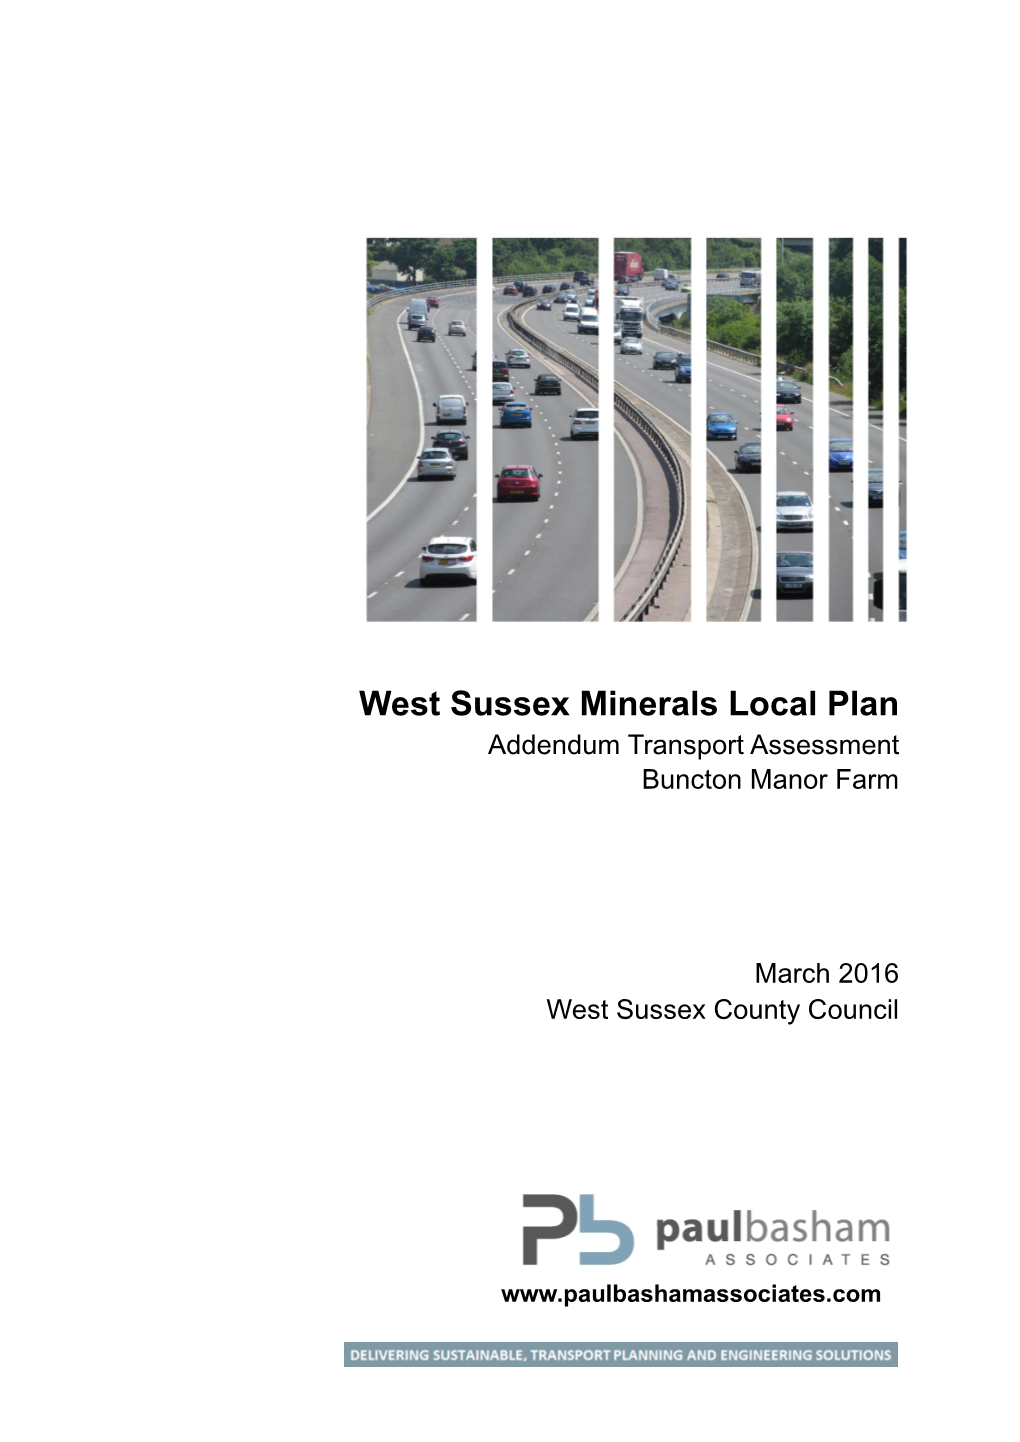 West Sussex Minerals Local Plan Transport Assessment: Addendum